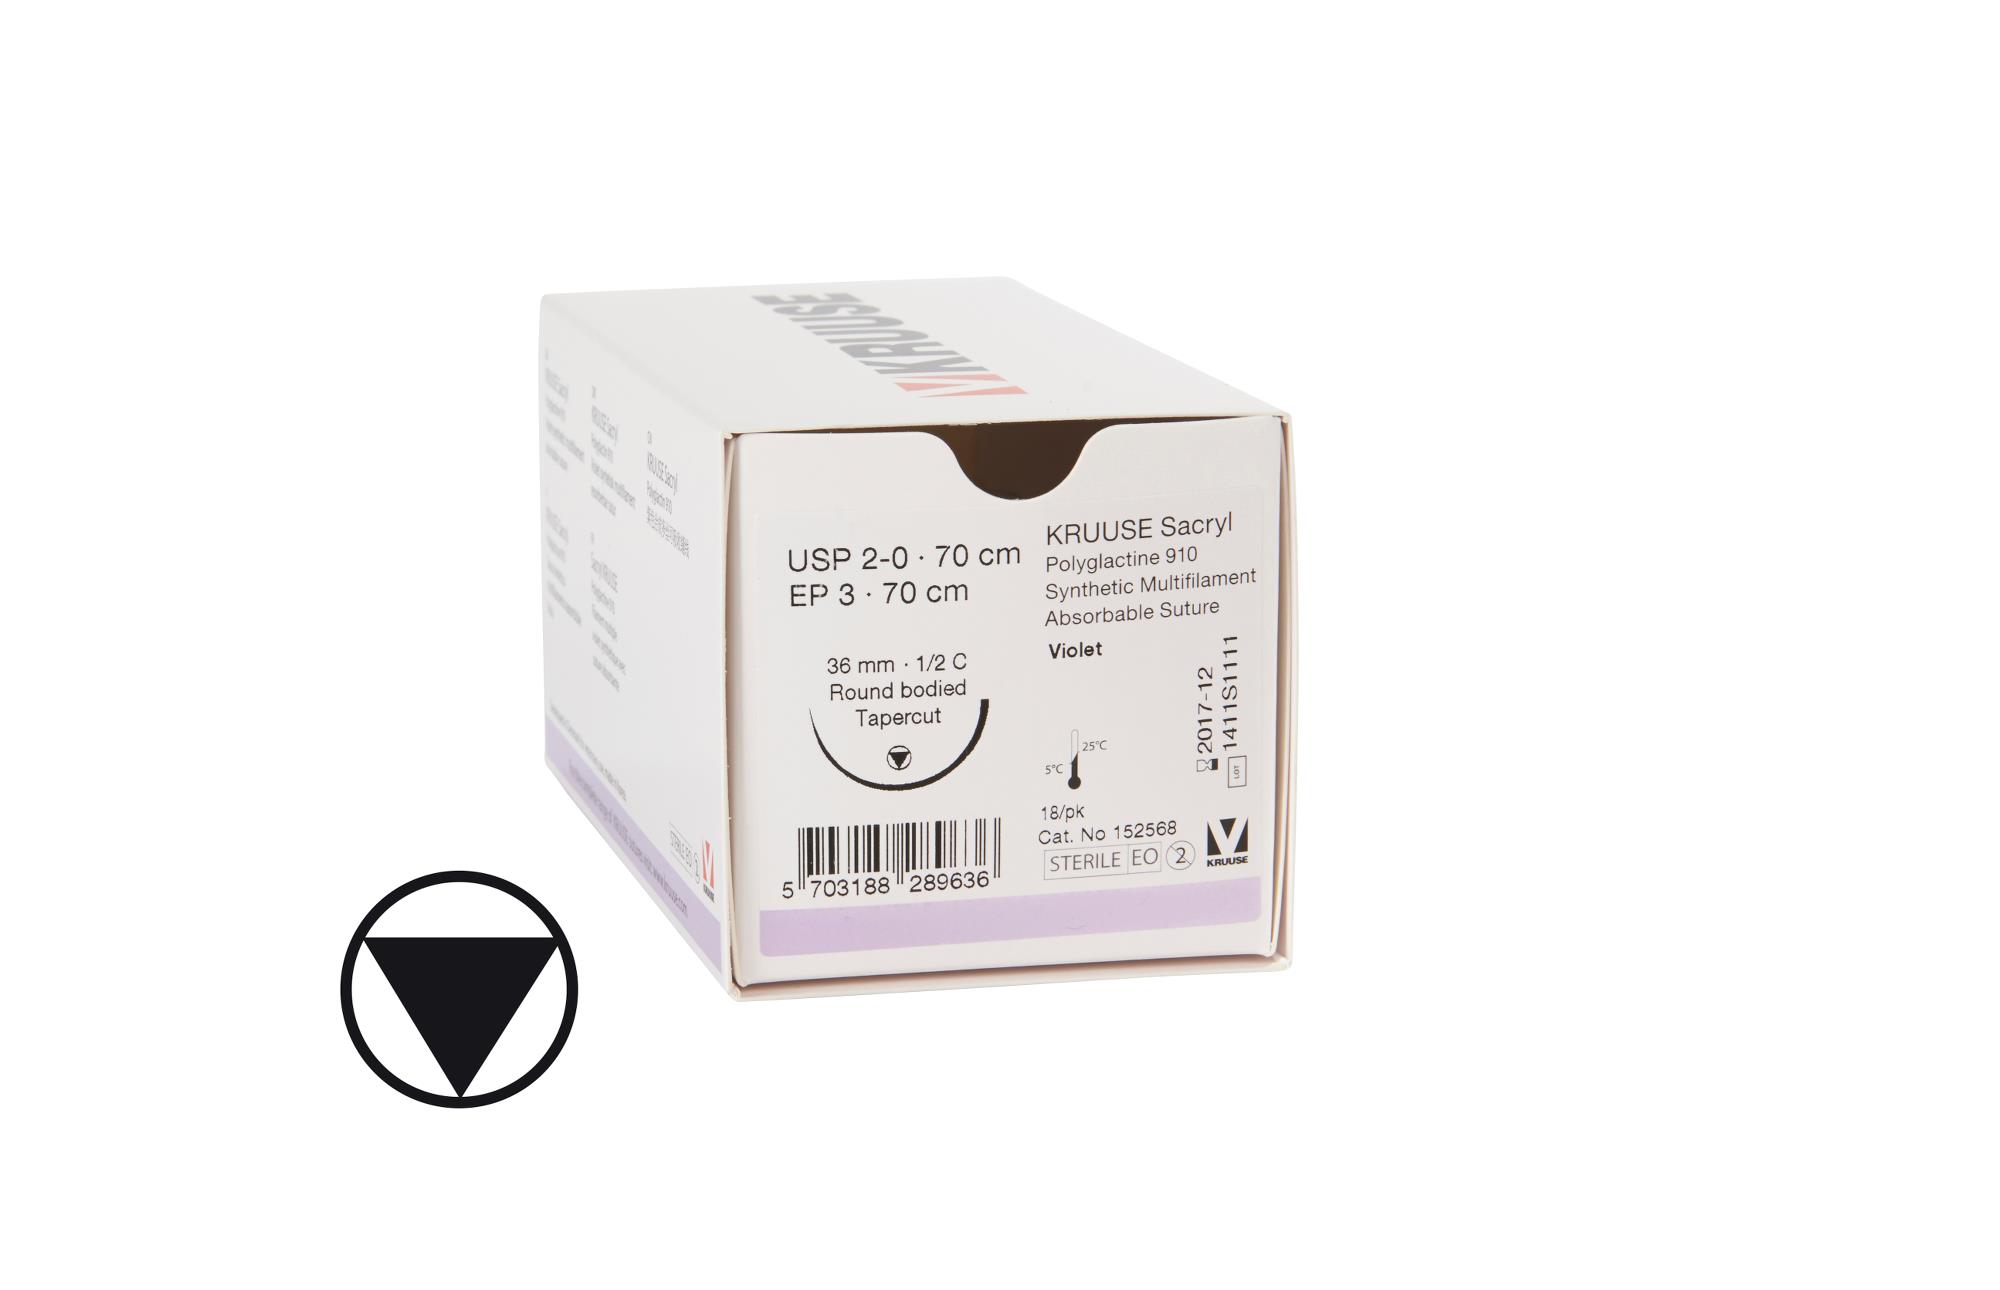 KRUUSE Sacryl sutur, USP 2-0, 70 cm, violet, 36 mm needle, ½C, round bodied tapercut, 18/pk